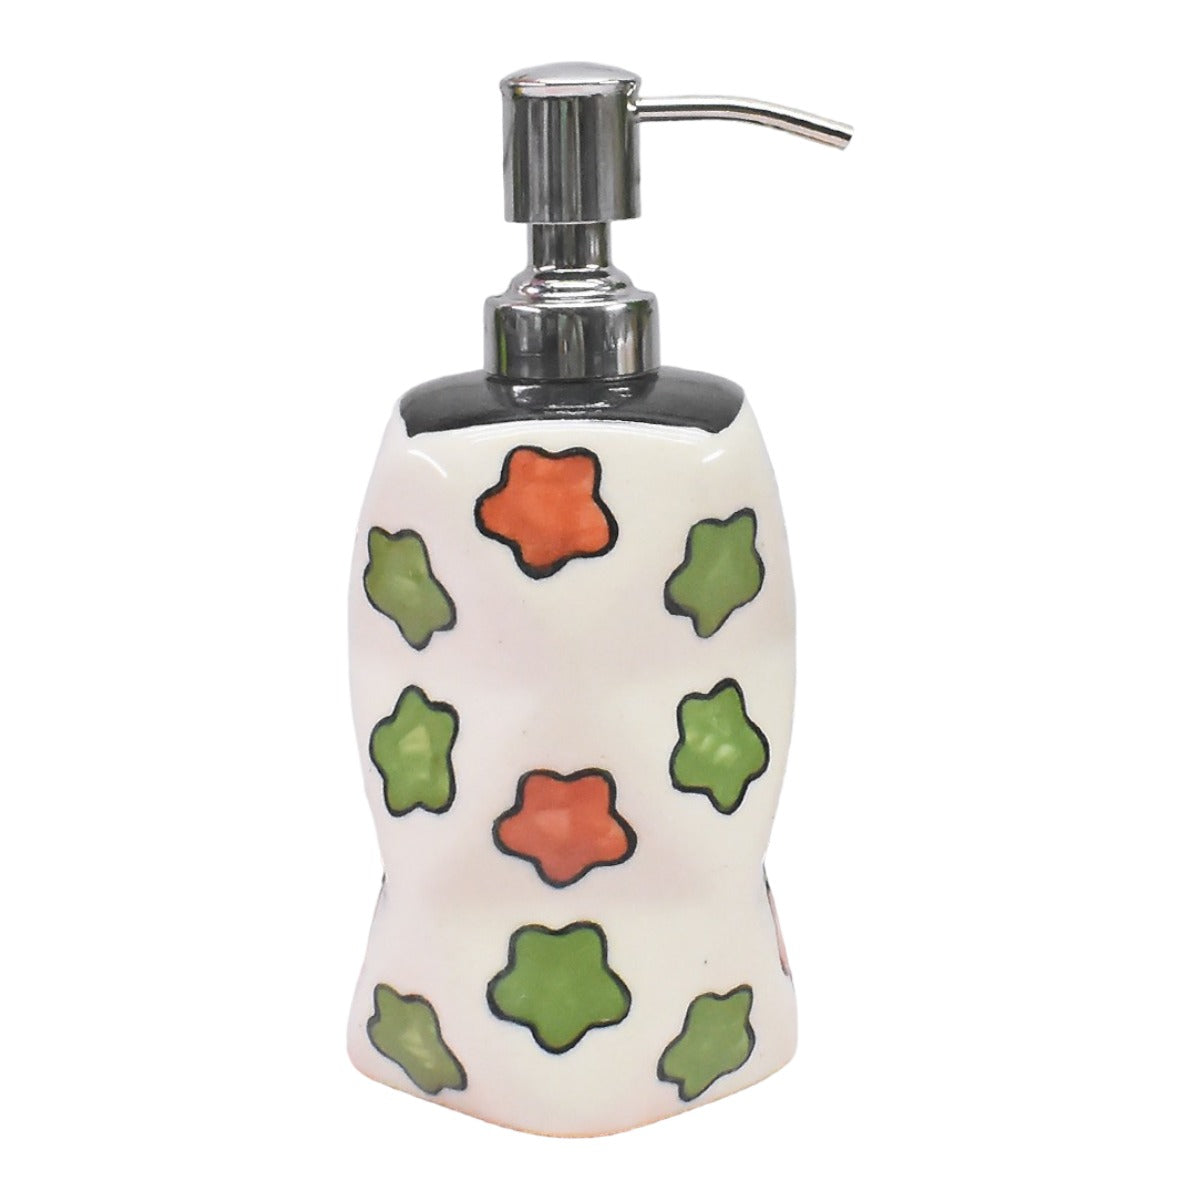 Ceramic Soap Dispenser handwash Pump for Bathroom, Set of 1, Black (9685)